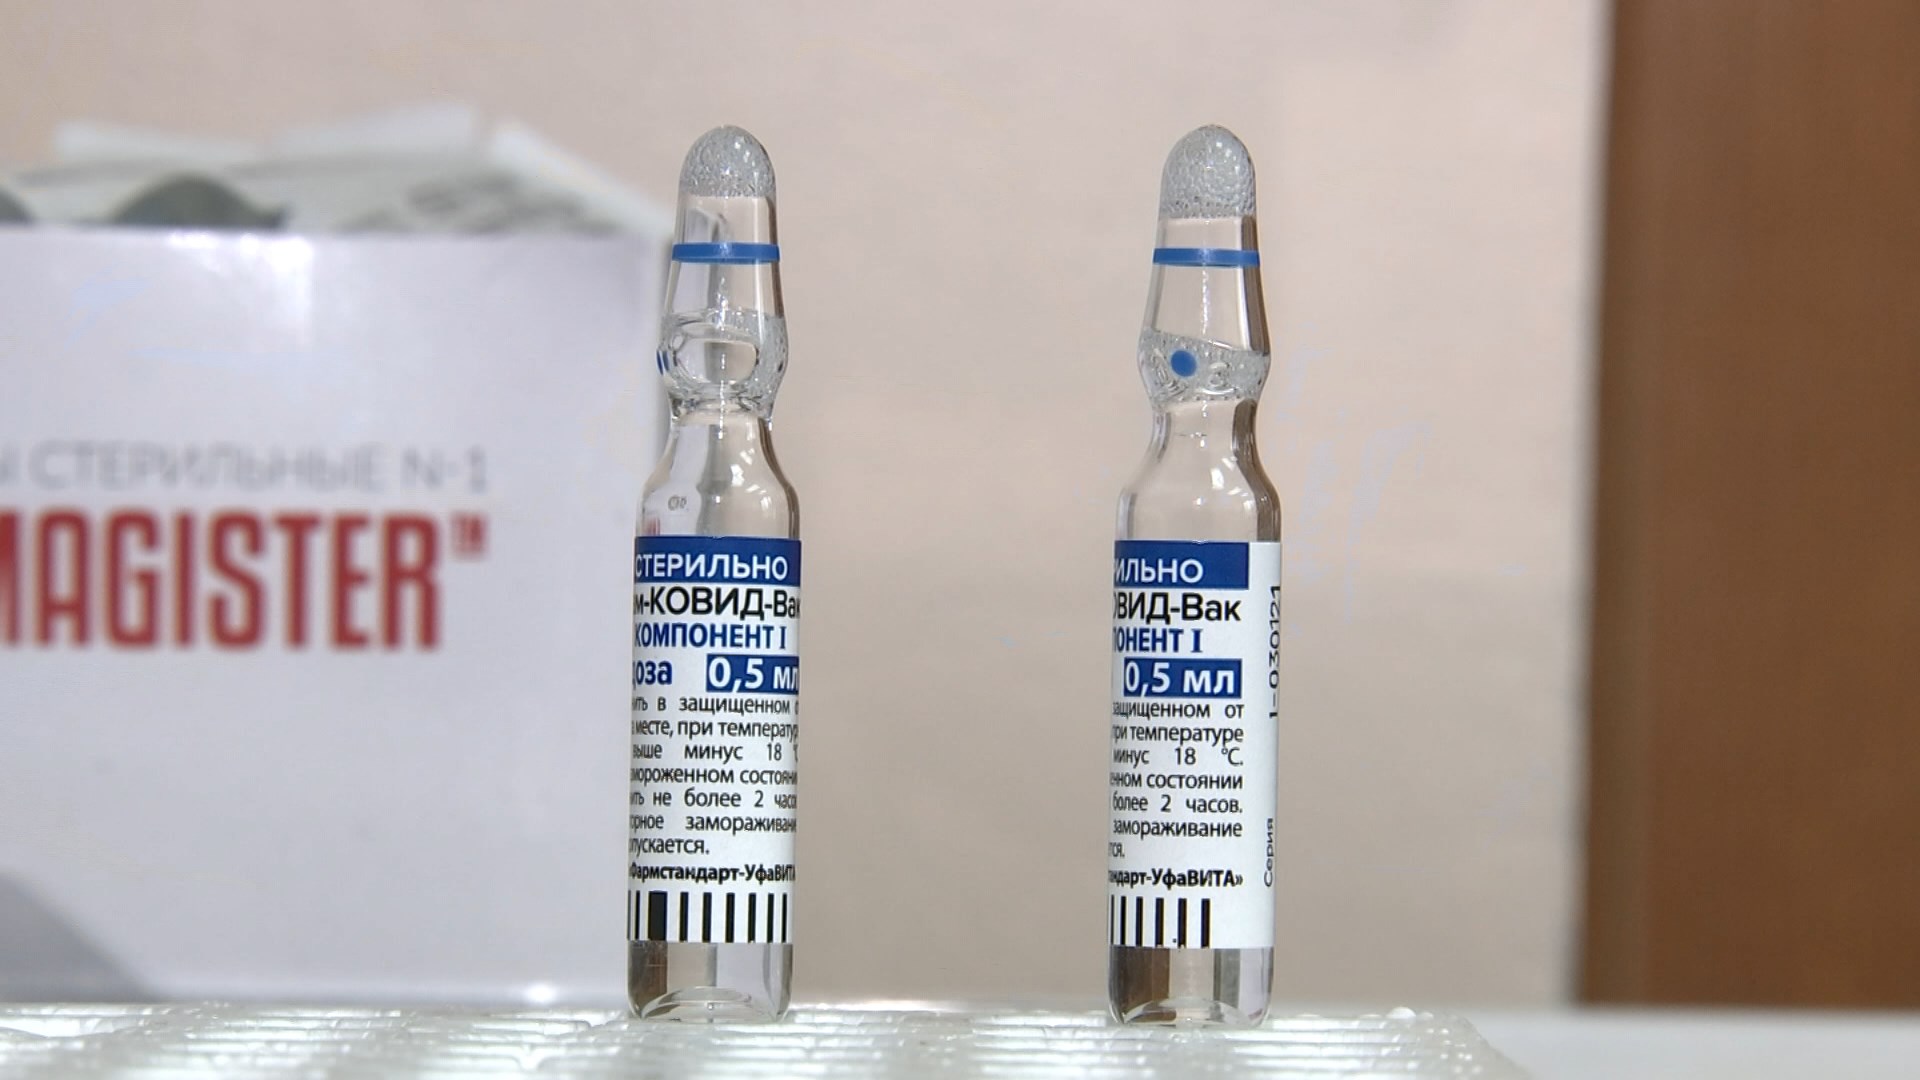 Intensive COVID-19 vaccination begins in Belarus